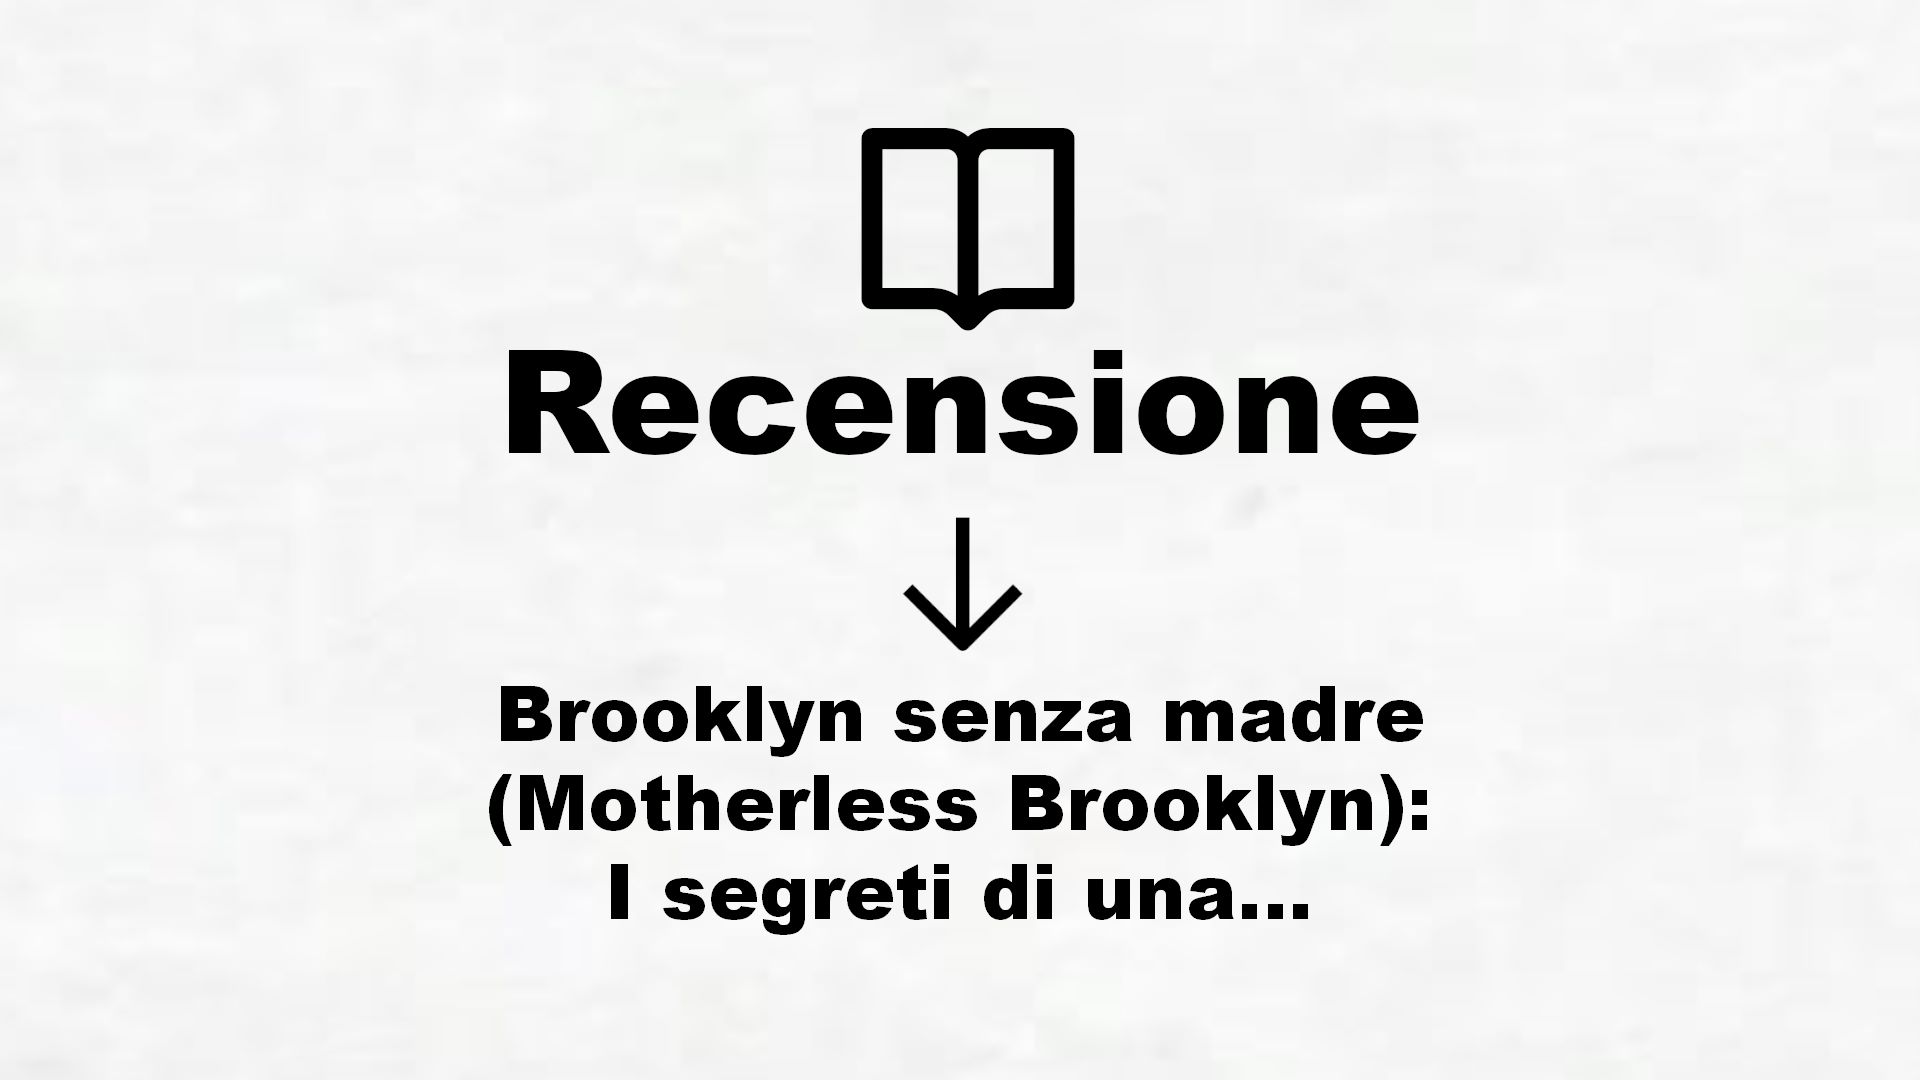 Brooklyn senza madre (Motherless Brooklyn): I segreti di una città – Recensione Libro